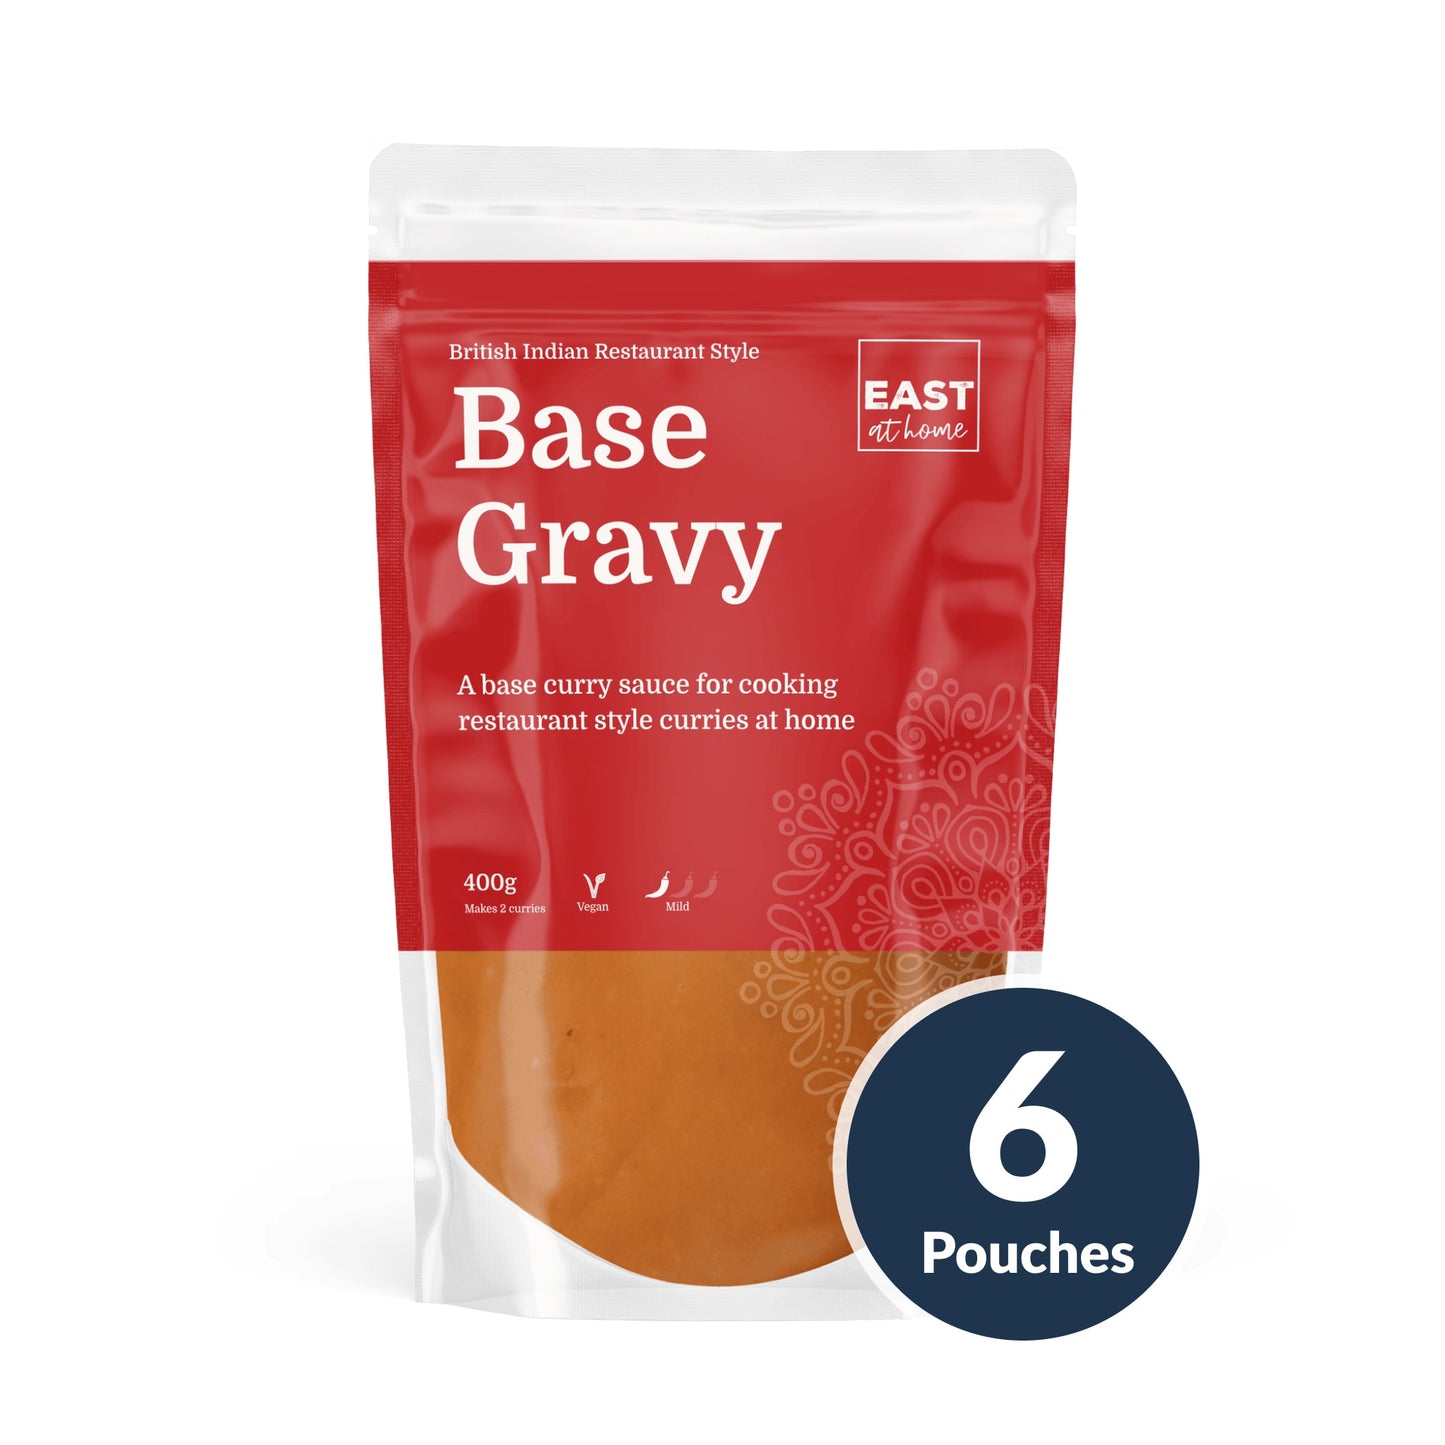 BIR Base Gravy - 6 Pouches